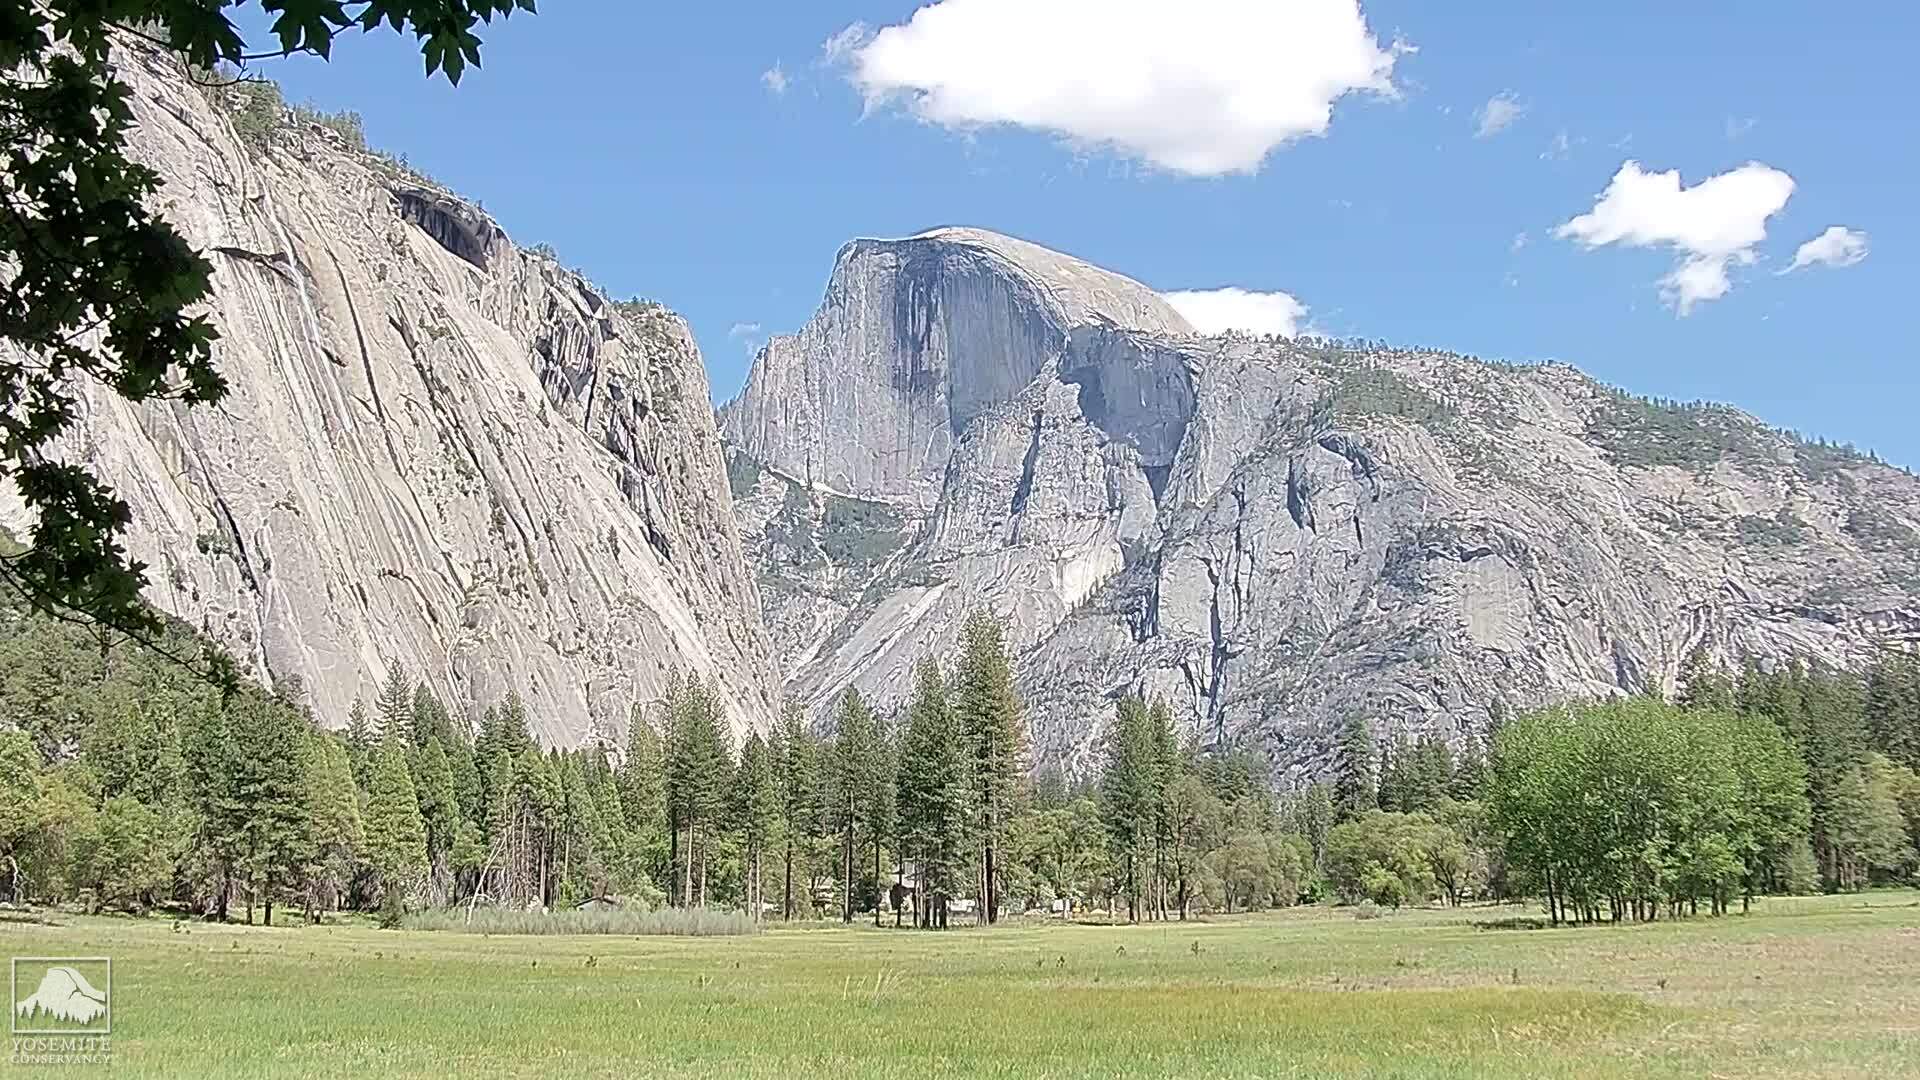 Yosemite-Nationalpark, Kalifornien Do. 14:45